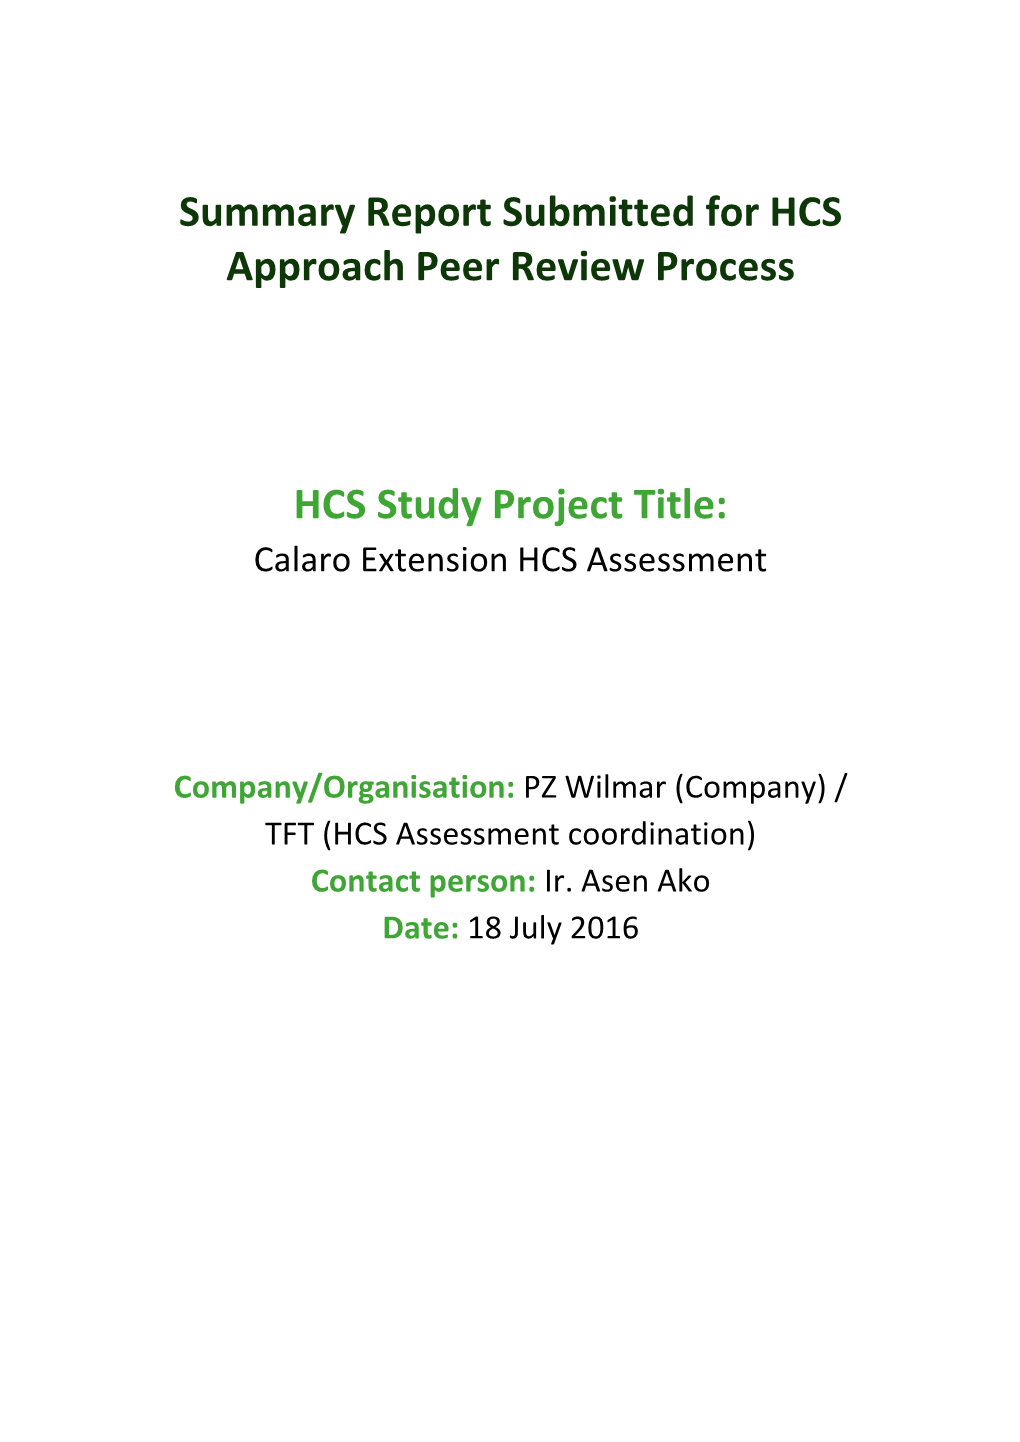 HCS Study Project Title: Calaro Extension HCS Assessment